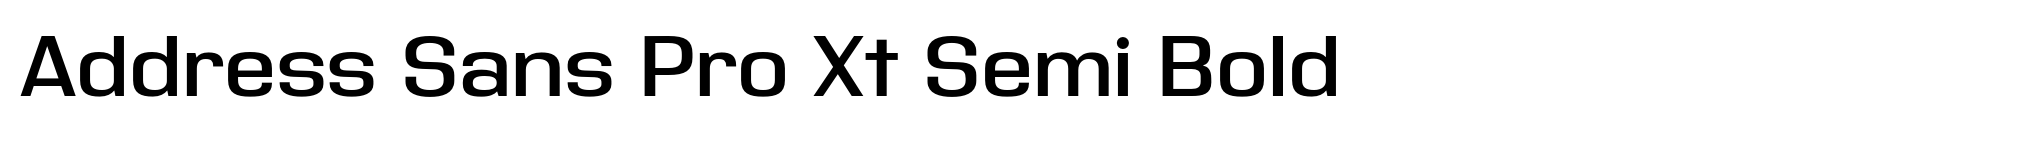 Address Sans Pro Xt Semi Bold image